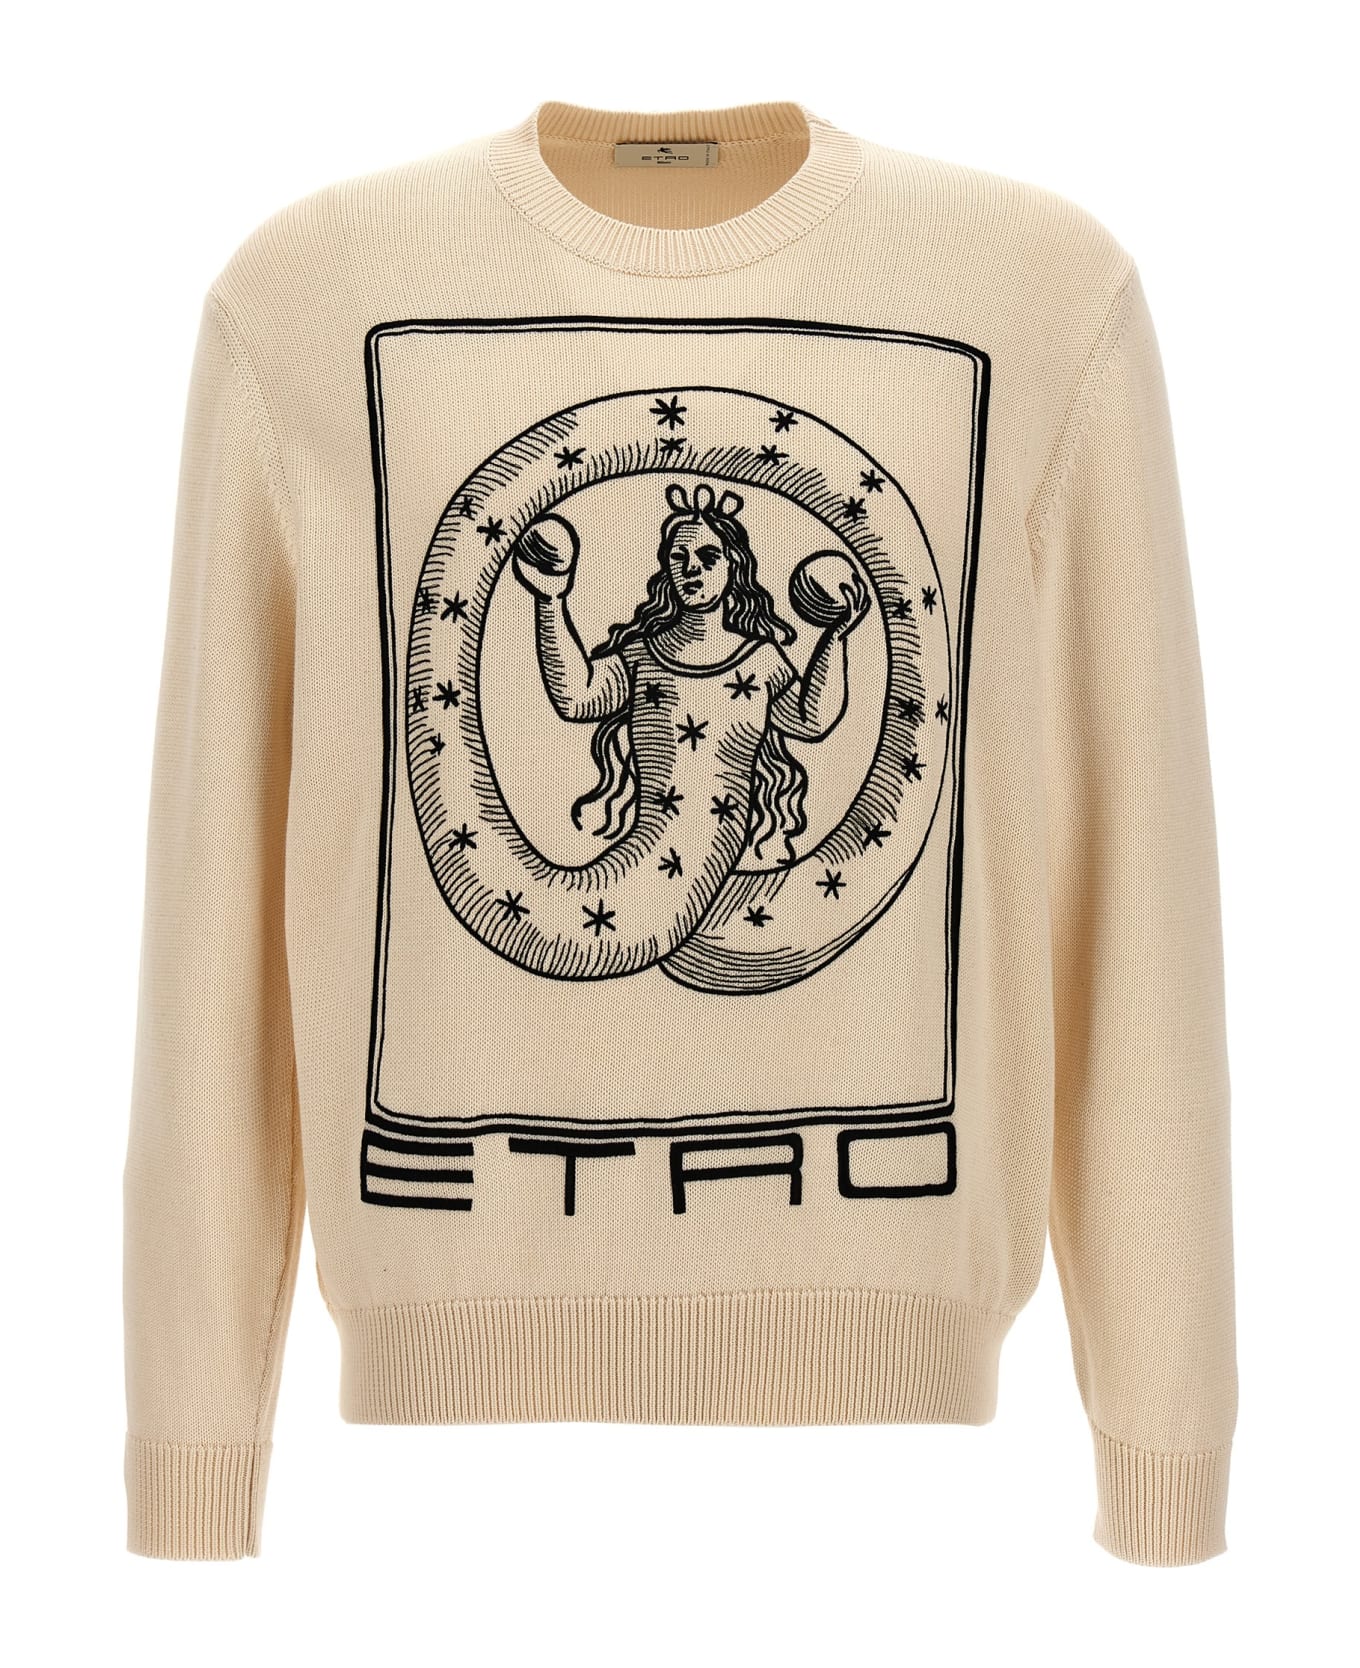 Etro Logo Embroidery Sweater - Beige